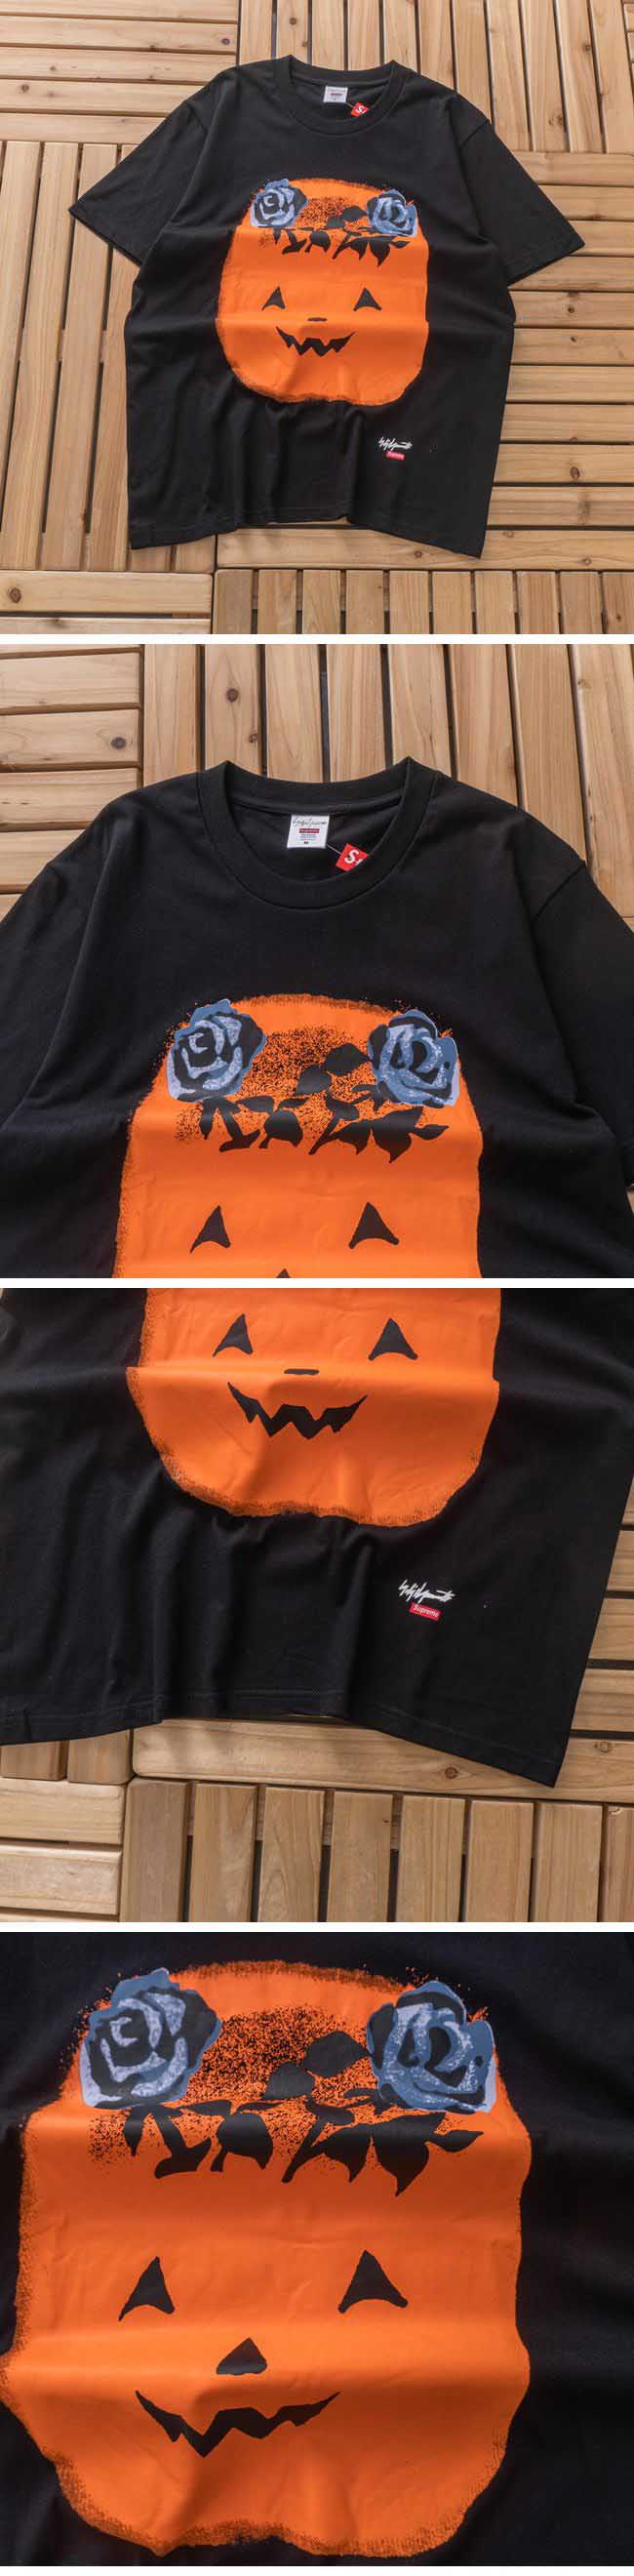 Supreme x Yohji Yamamoto 22FW Pumpkin Print Tee シュプリーム x 山本耀司 22FW パンプキン プリント Tシャツ ブラック